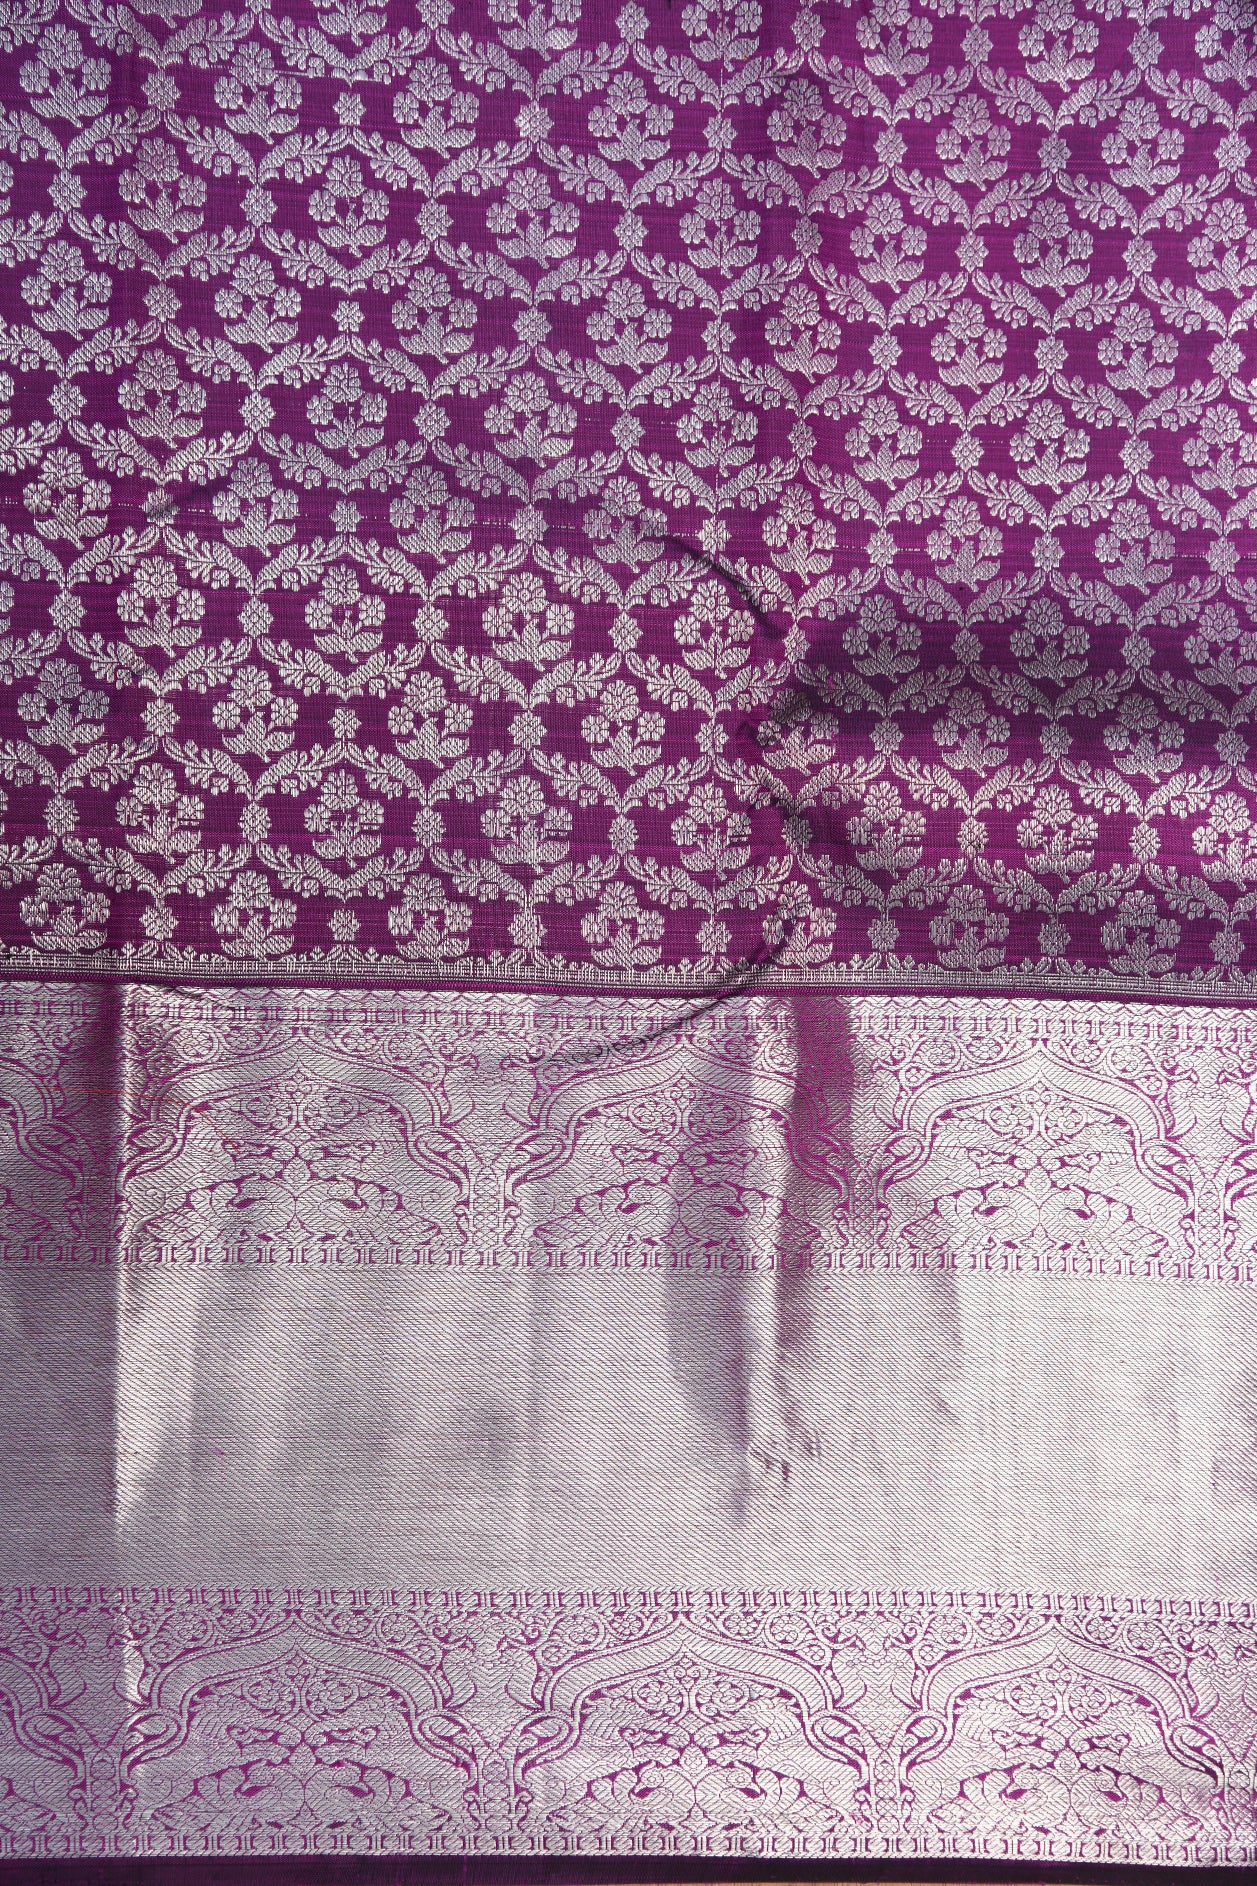 Big Silver Zari Border In Brocade Purple Kanchipuram Silk Saree